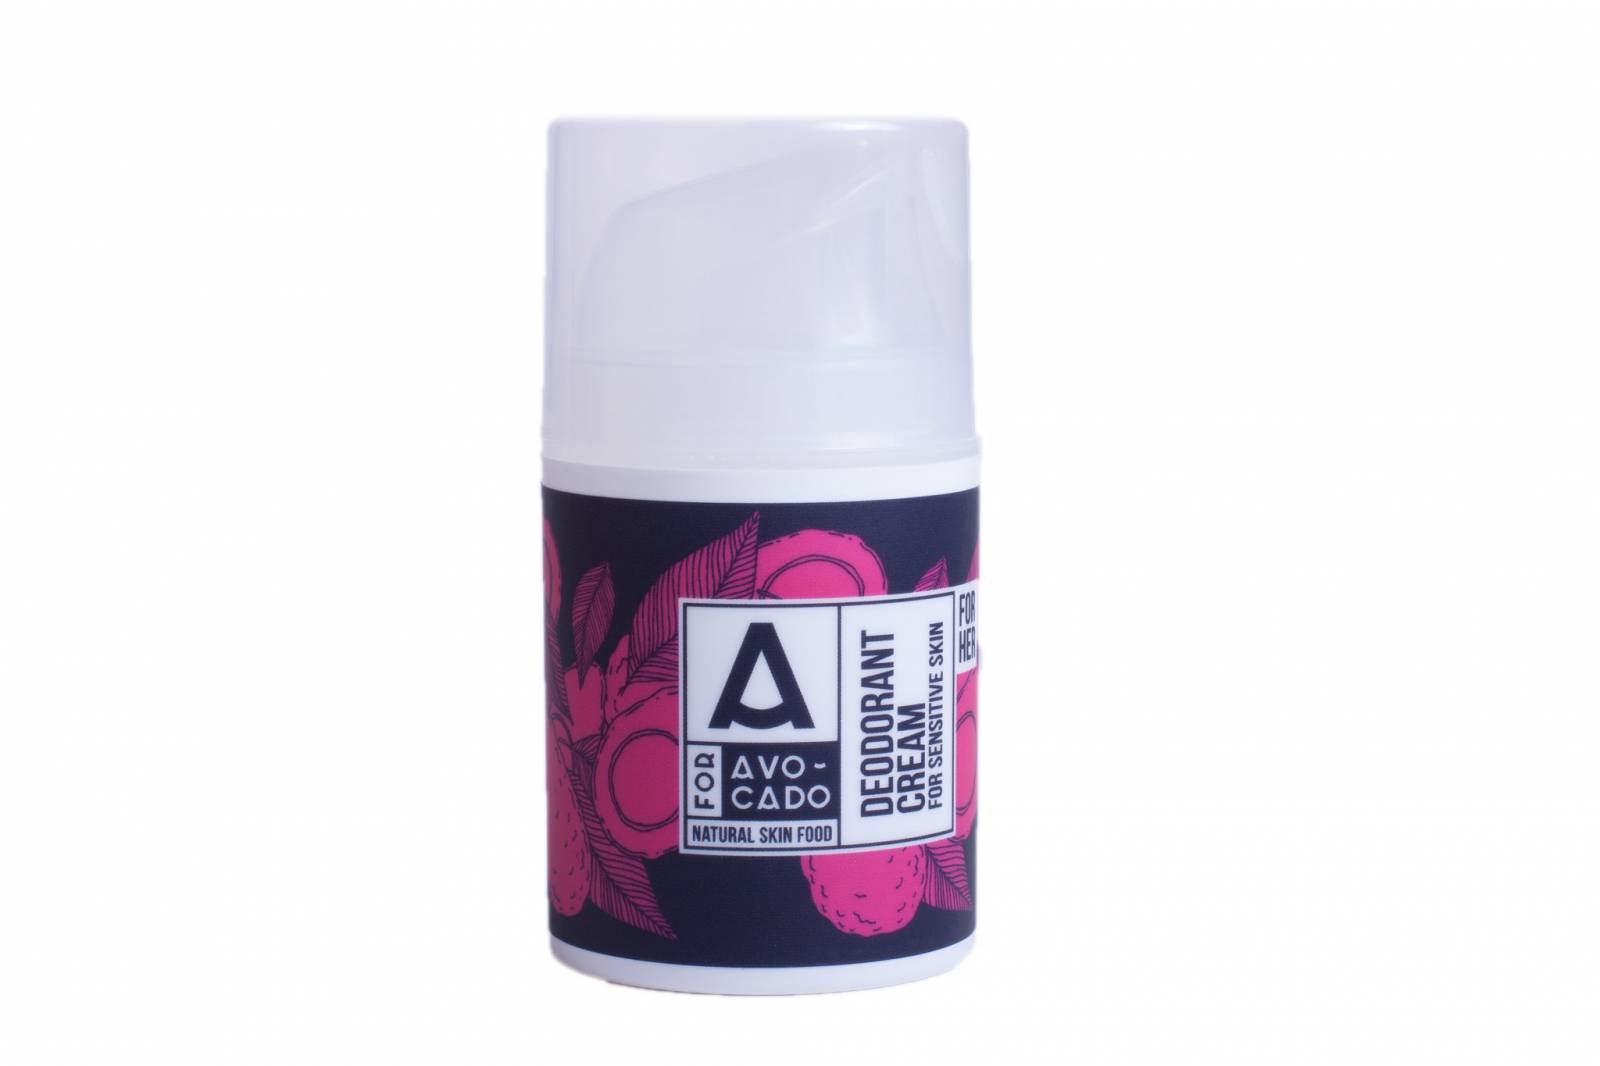 Deodorant crema pentru femei, 30ml - a for avocado